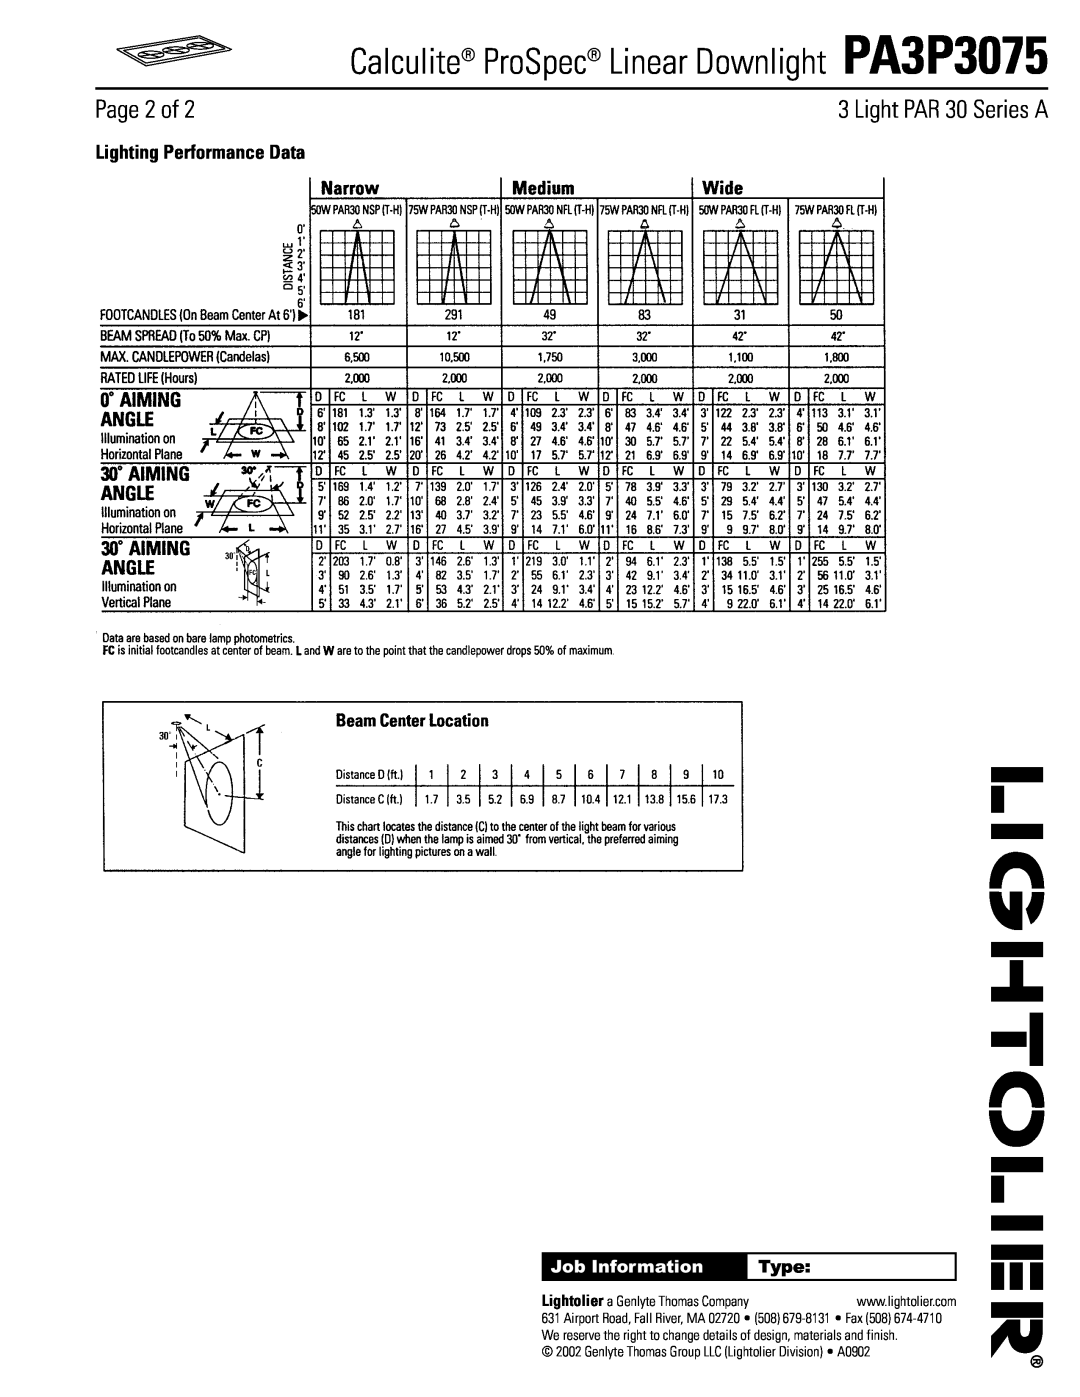 Lightolier Lighting Performance Data, Calculite ProSpec Linear Downlight PA3P3075, Page 2 of, Light PAR 30 Series A 